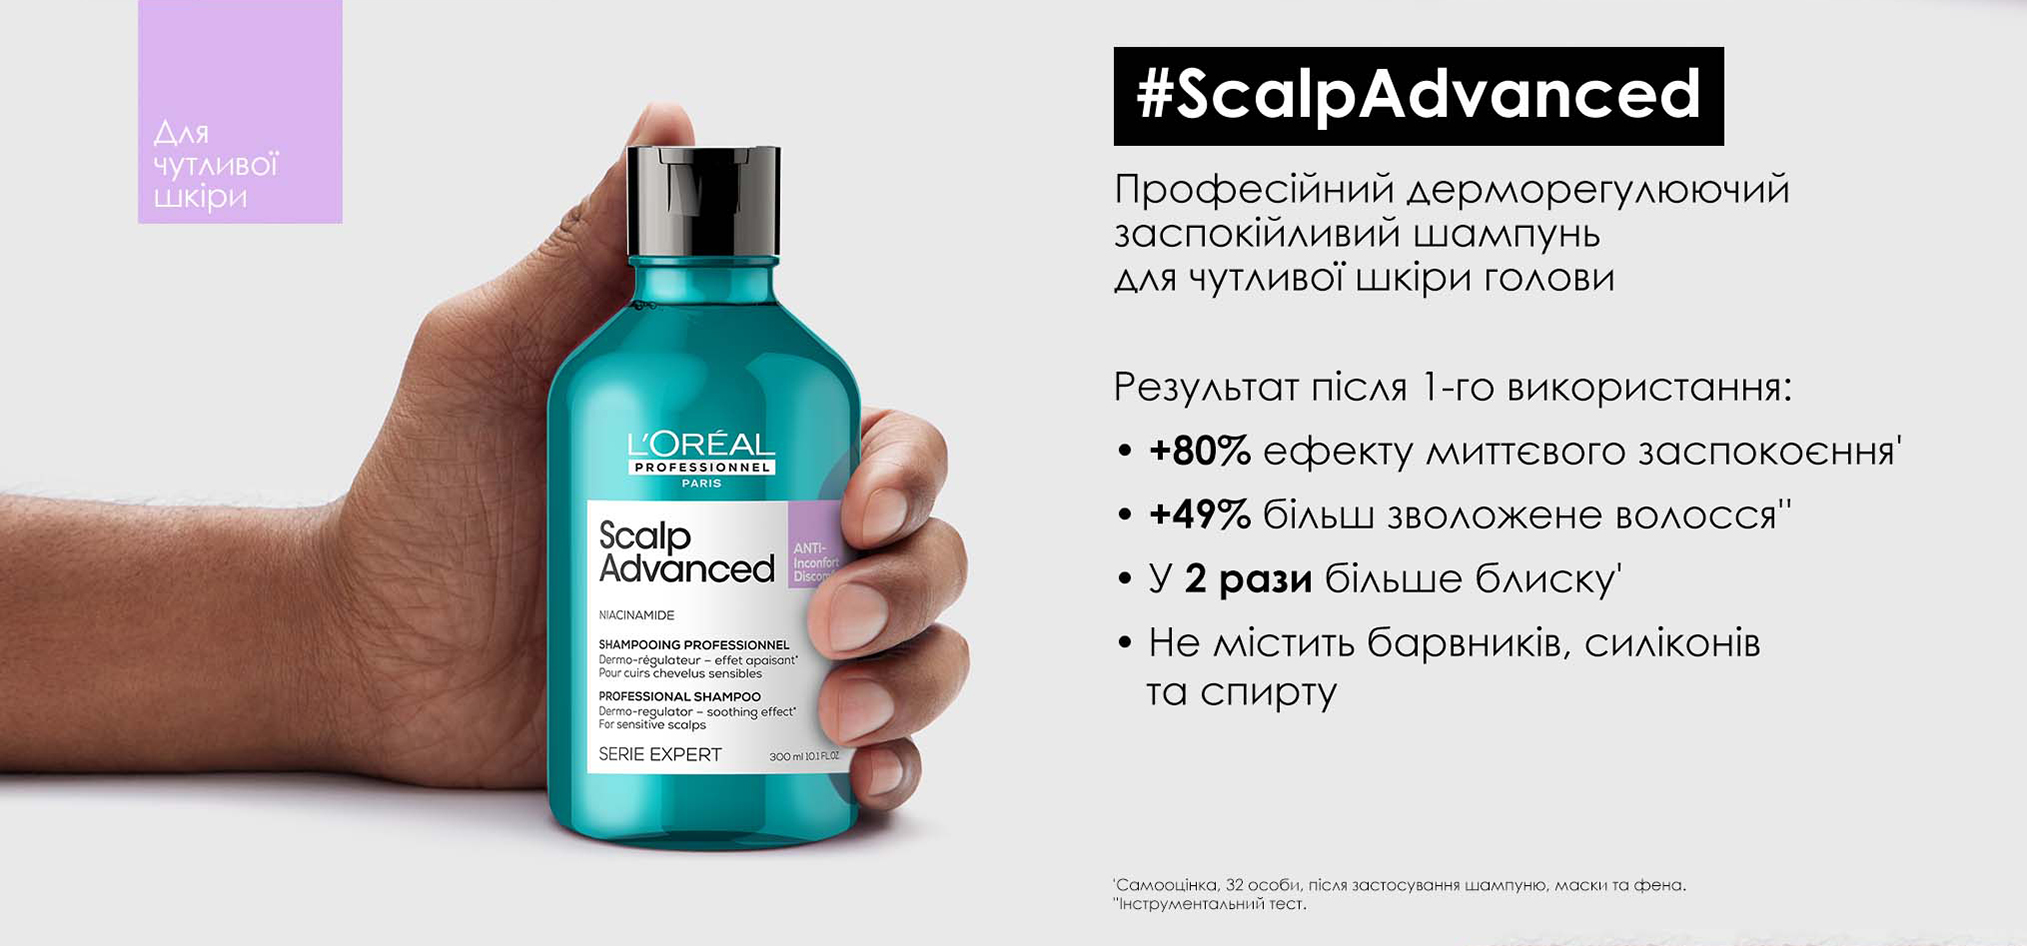 L'Oreal Professionnel Scalp Advanced Niacinamide Dermo-Regulator Shampoo